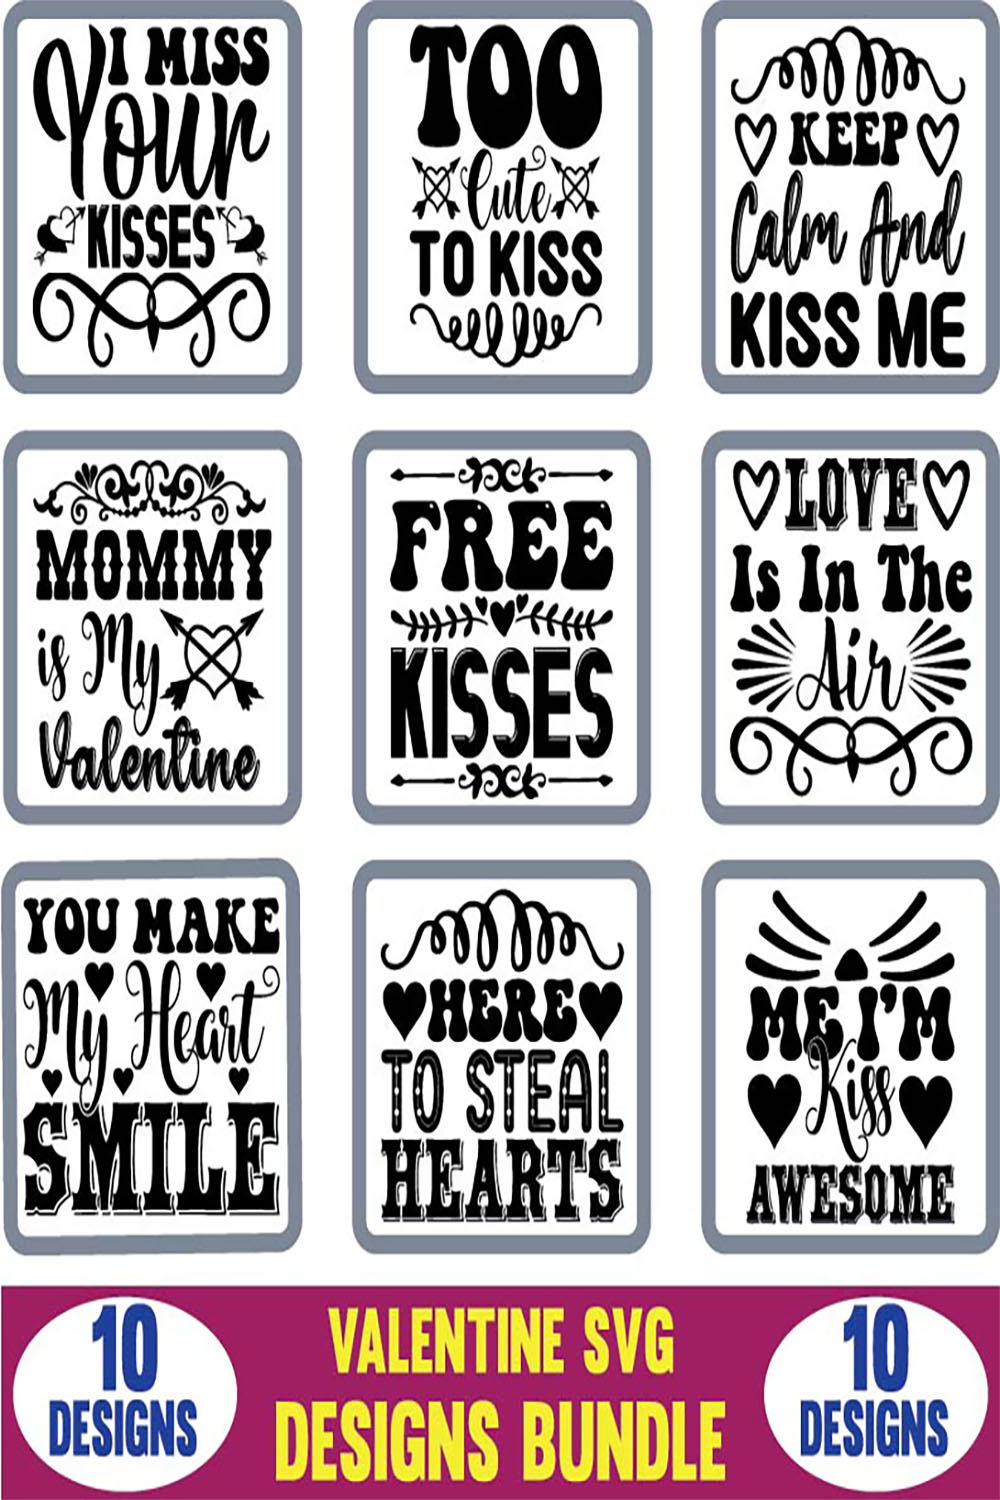 Valentine Typography SVG Designs Bundle pinterest image.